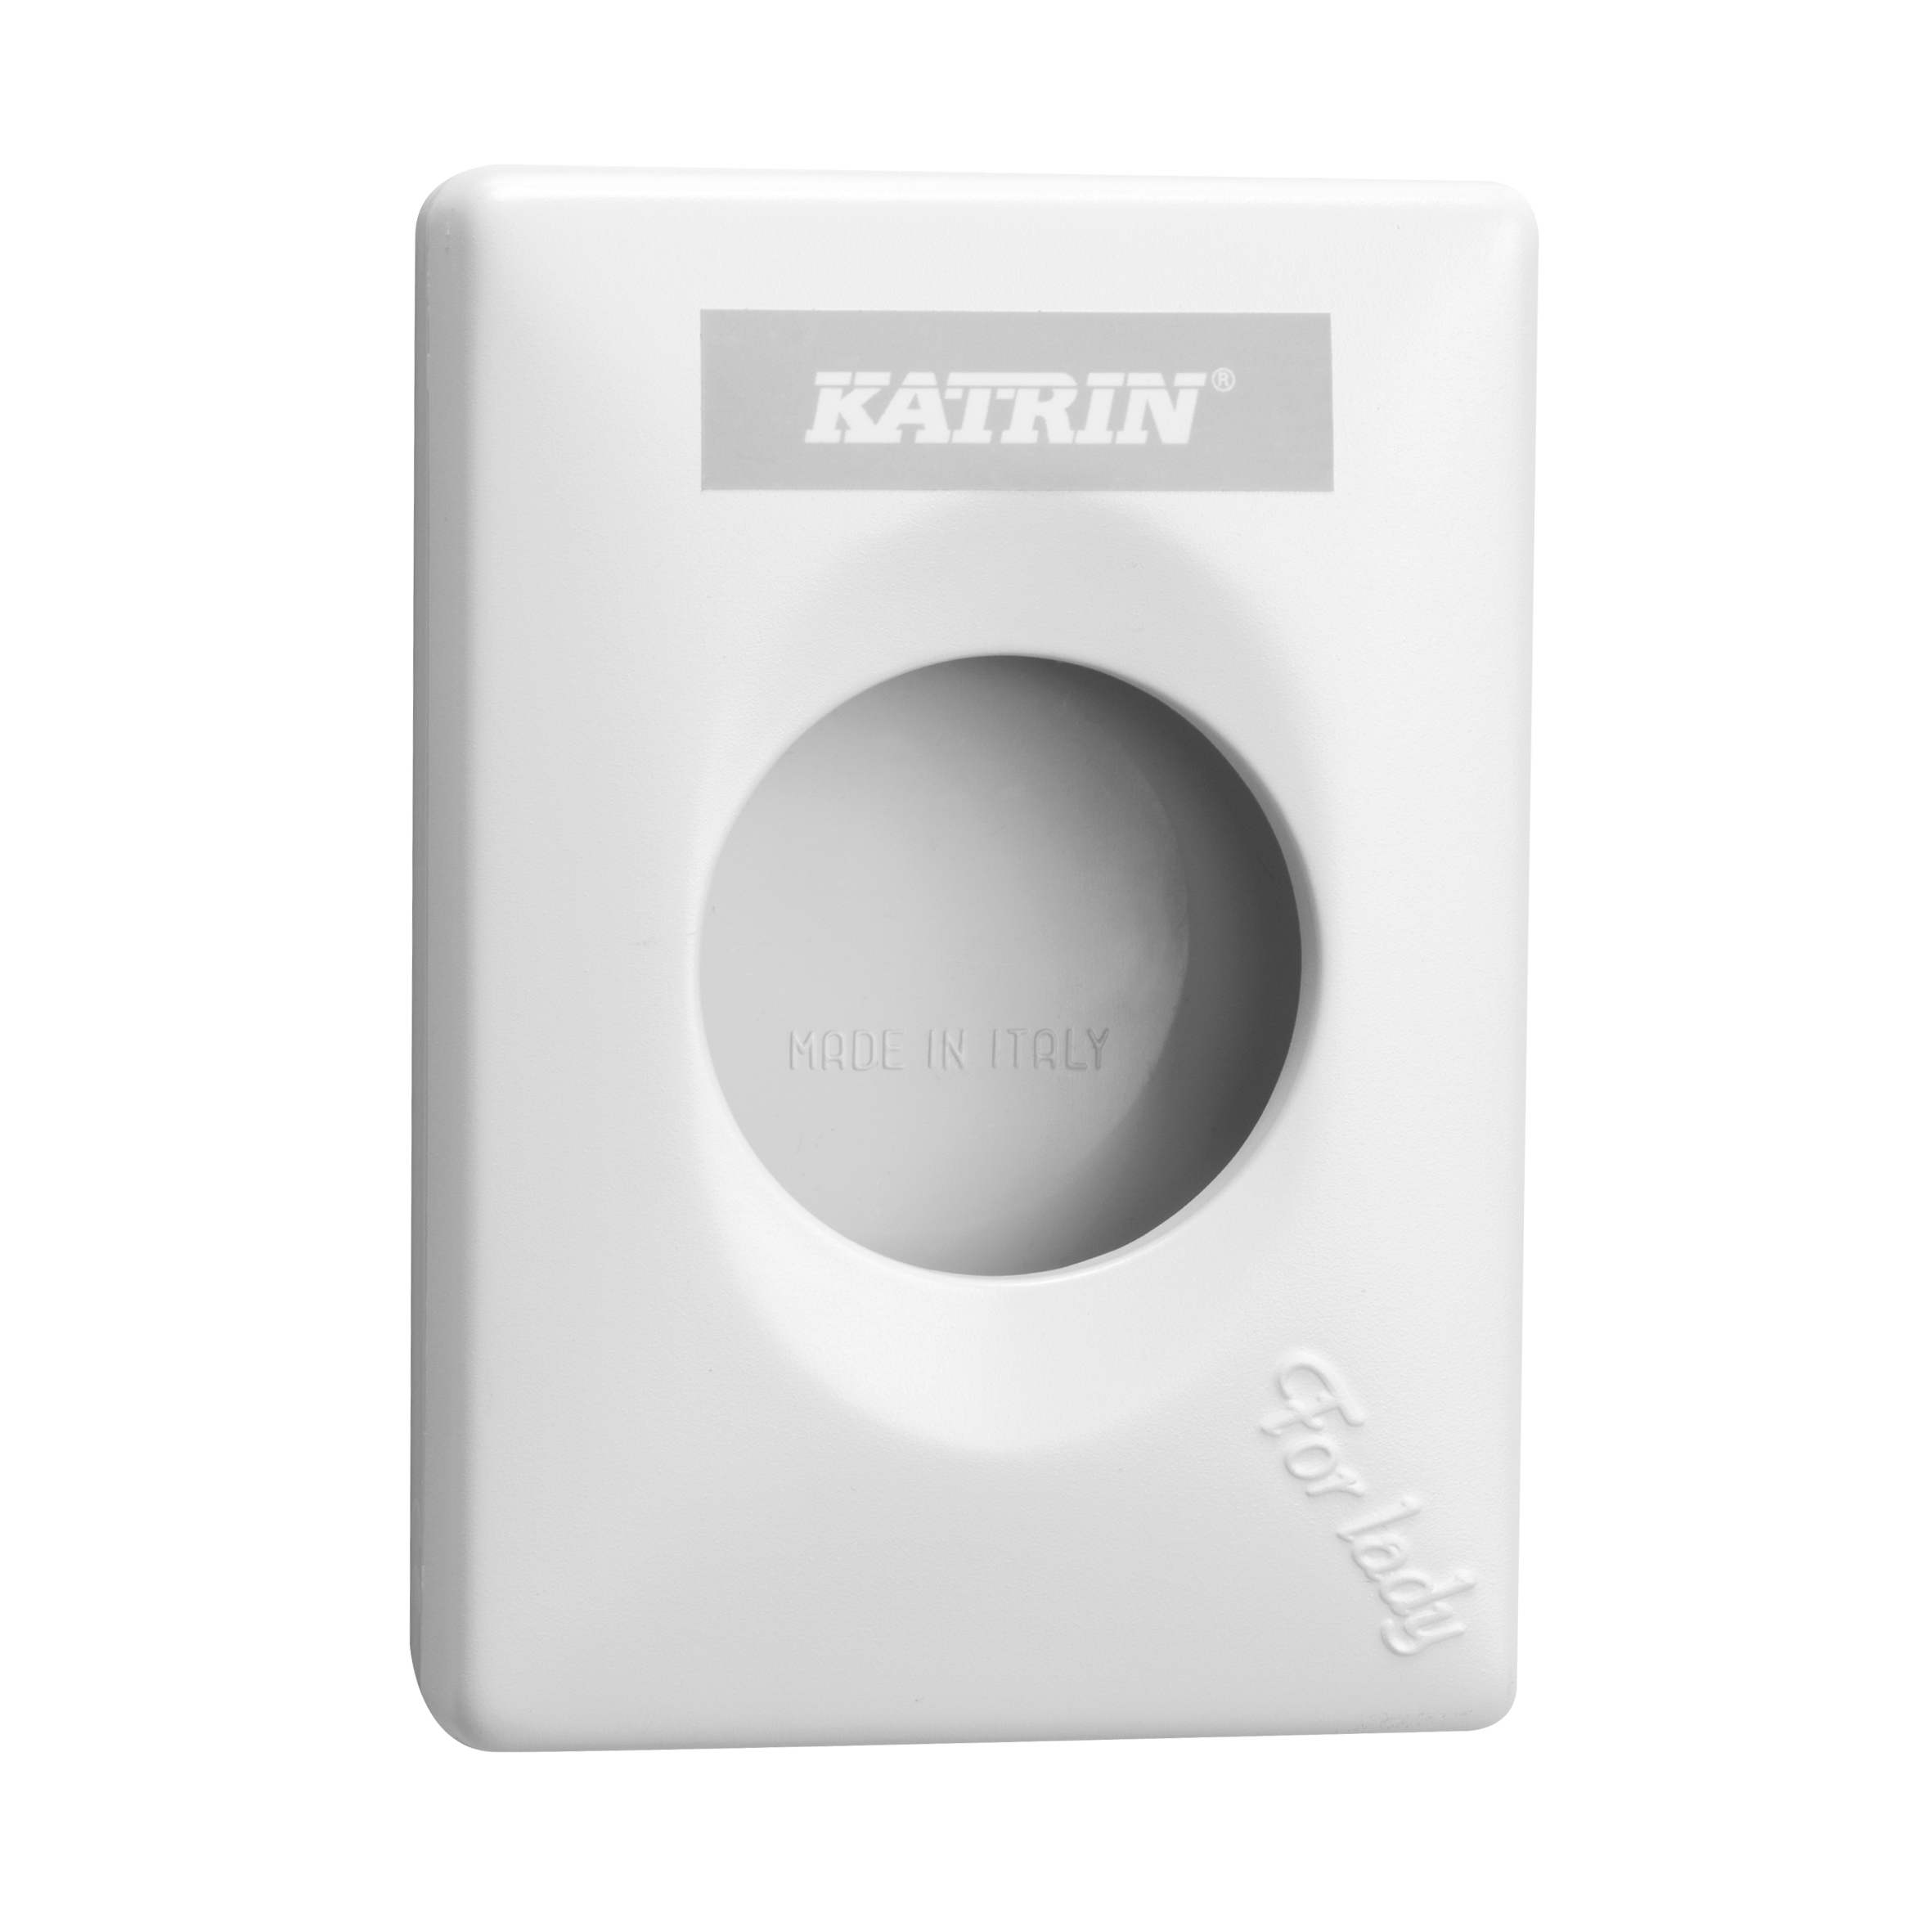 Katrin Inclusive Hygienebeutelspender Kunststoff 13,5 x 9,5 x 1,35 cm - 91875